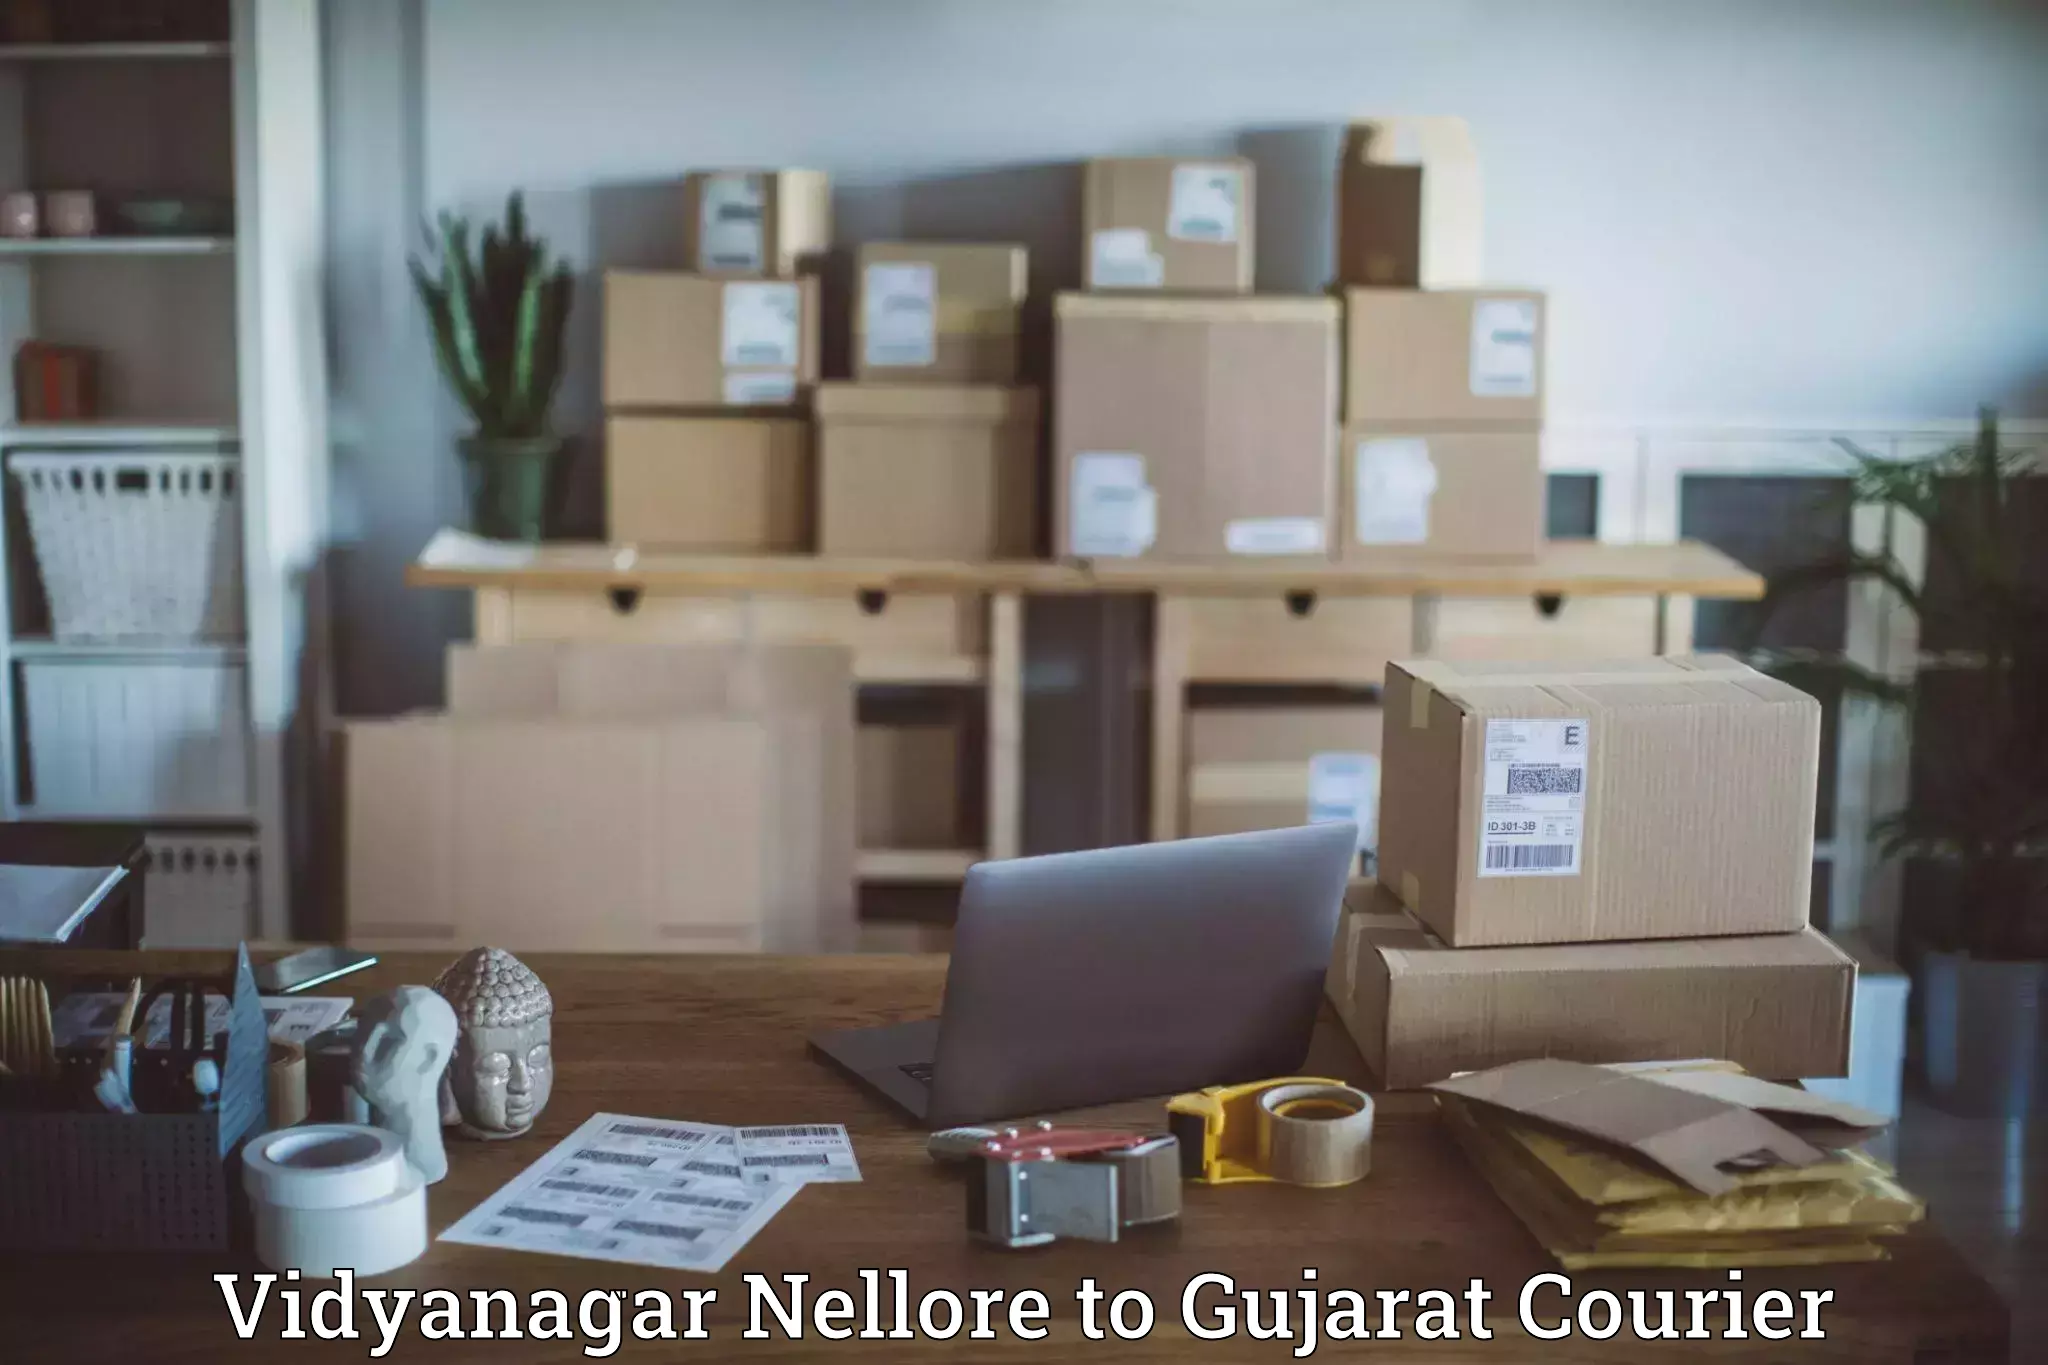 24-hour courier service Vidyanagar Nellore to Godhra